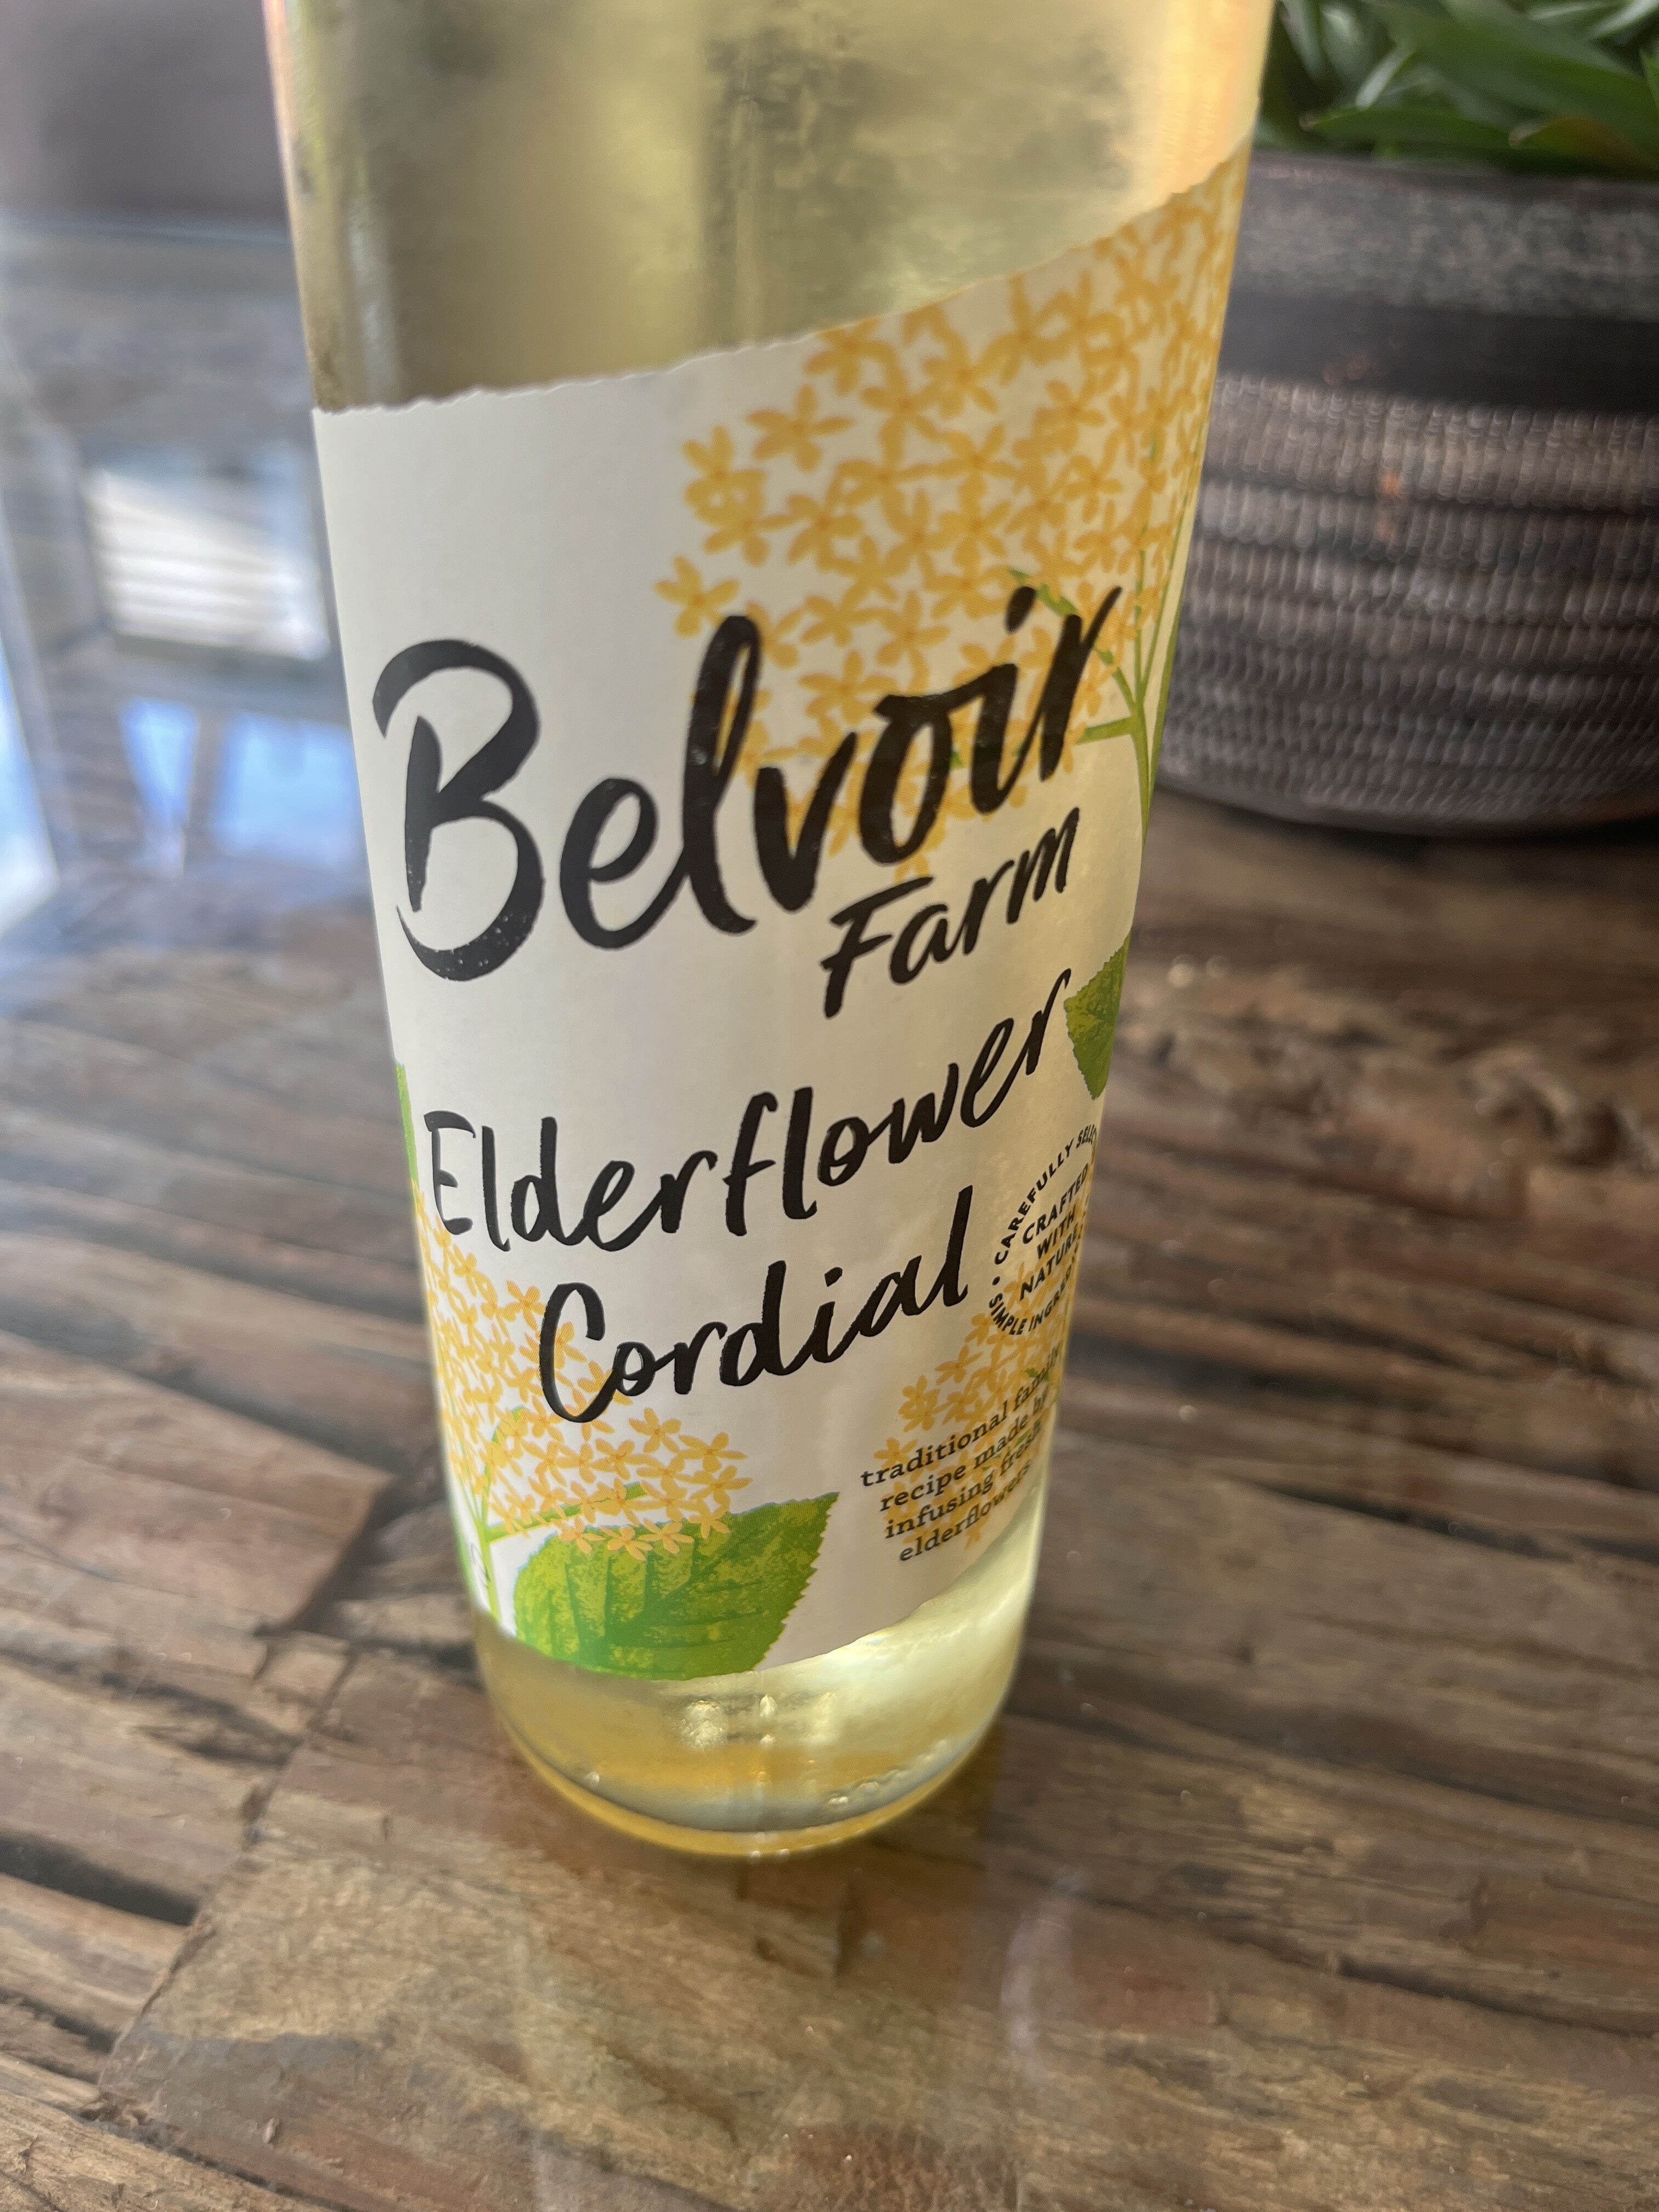 belvoir farm elderflower cordial - Product